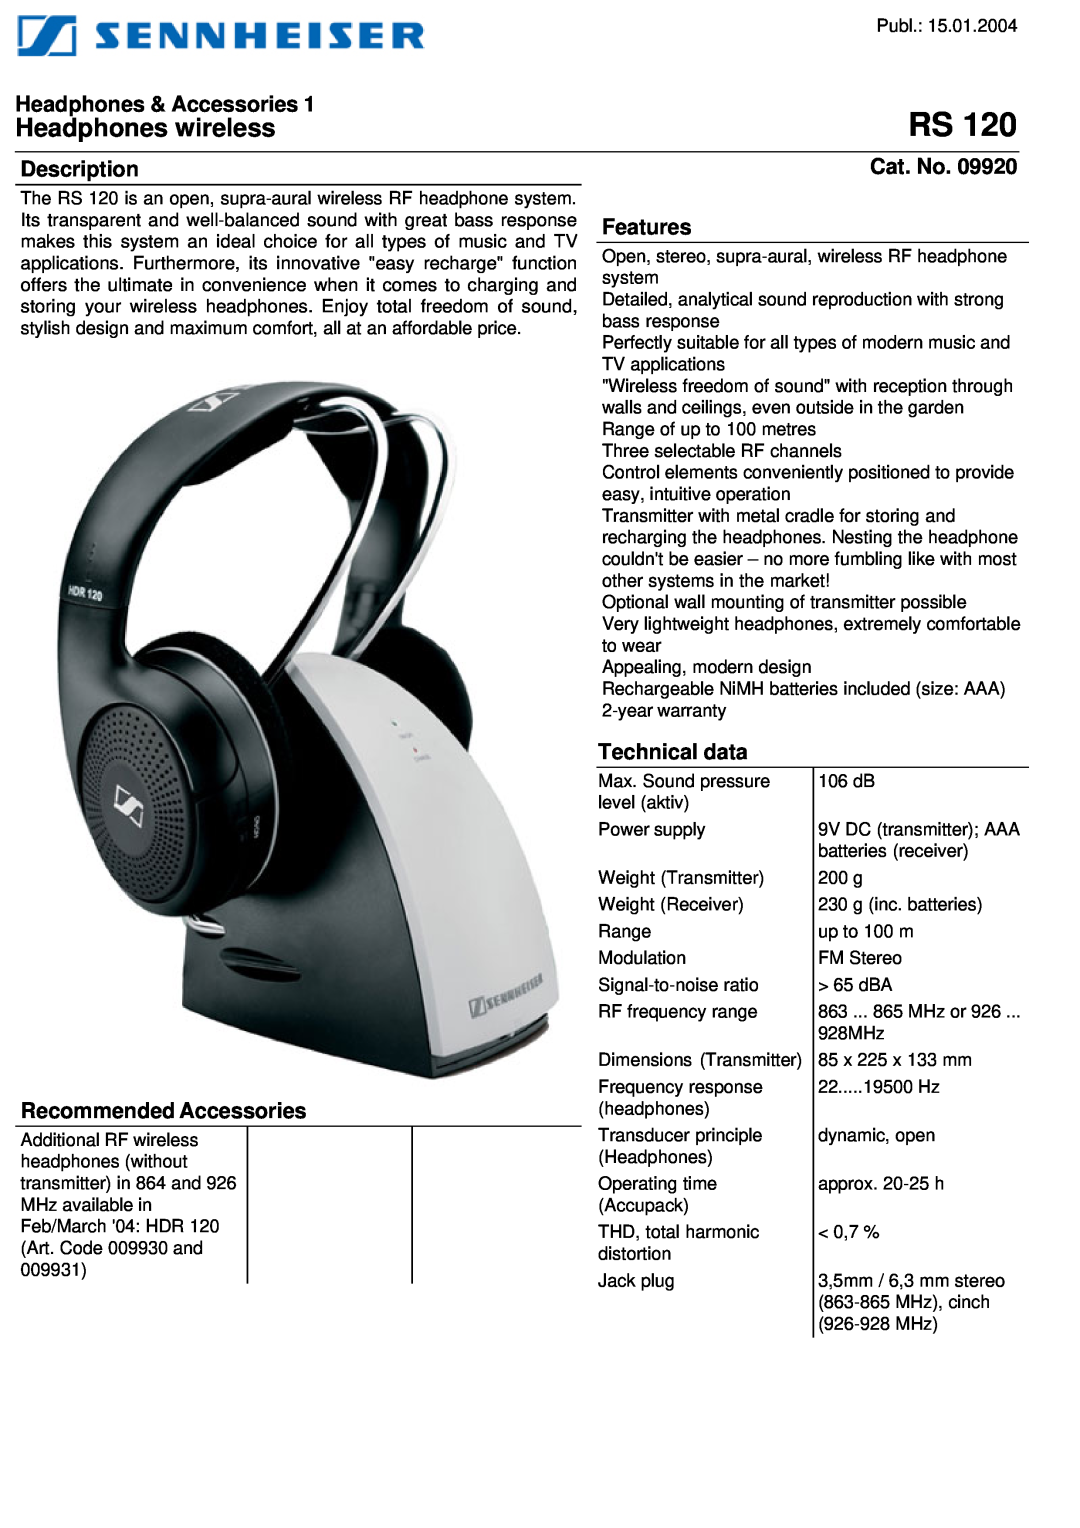 Sennheiser 09920 warranty Headphones wireless, Headphones & Accessories, Description, Cat. No, Features, Technical data 